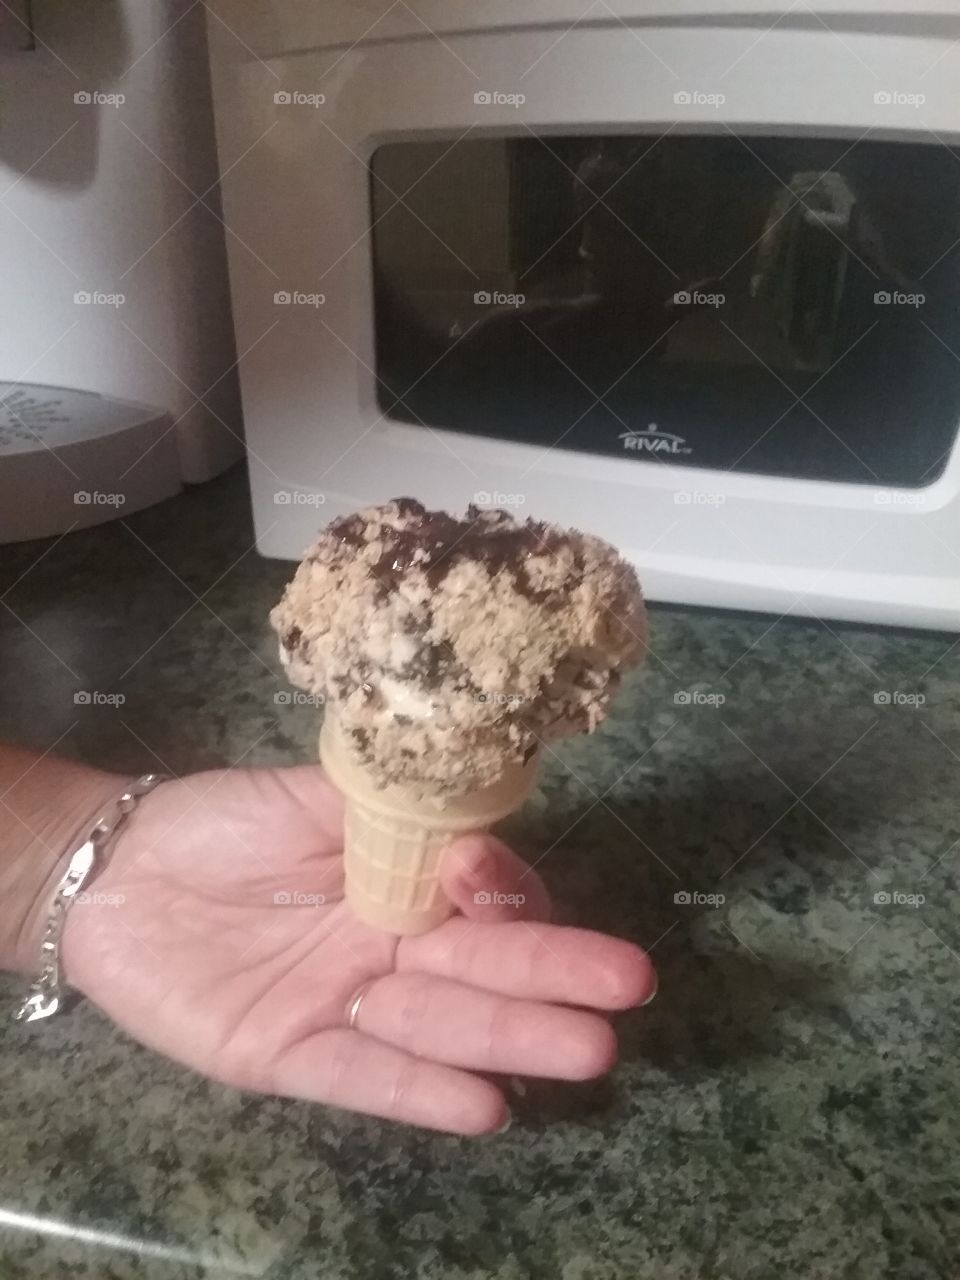 Holding my yummy ice cream creation